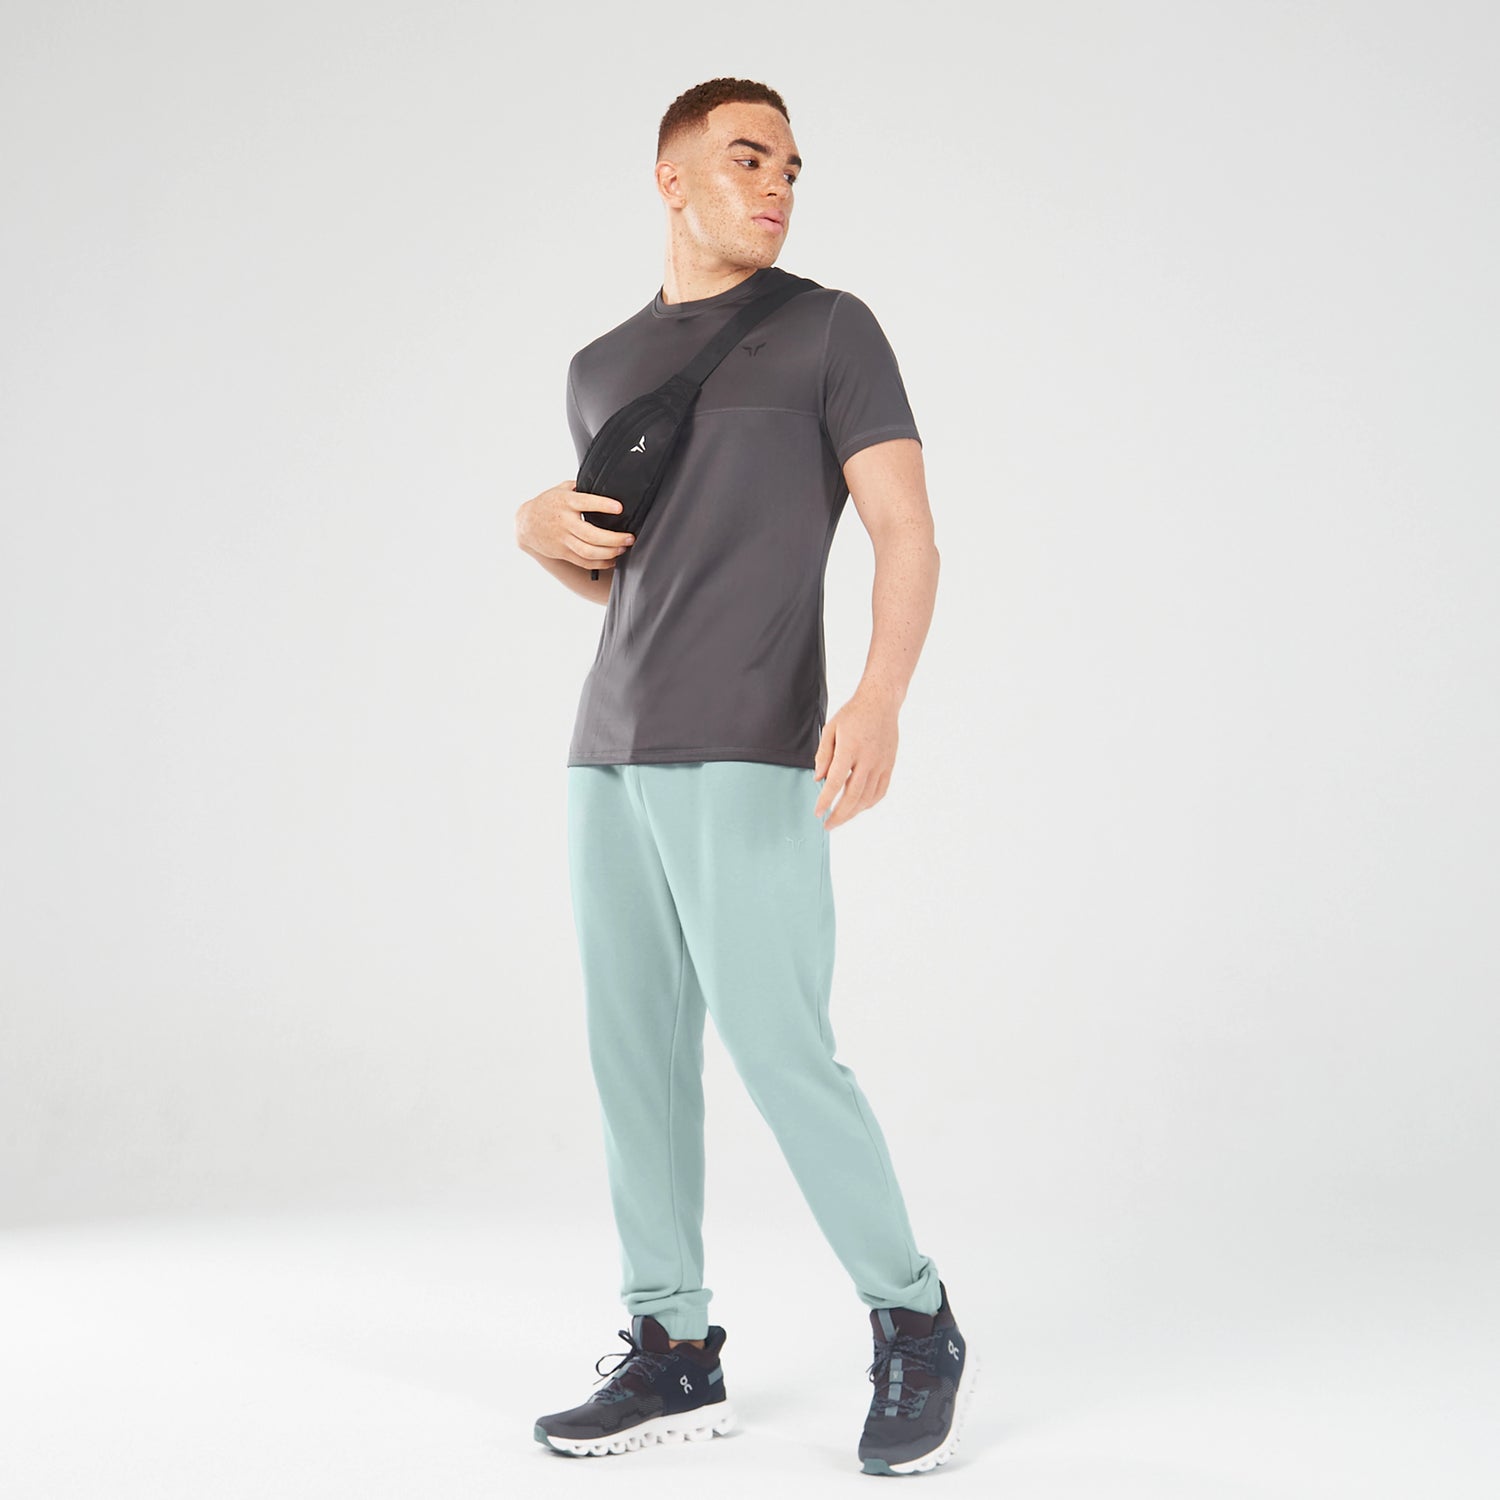 squatwolf-gym-wear-essential-contrast-tee-asphalt-workout-shirts-for-men